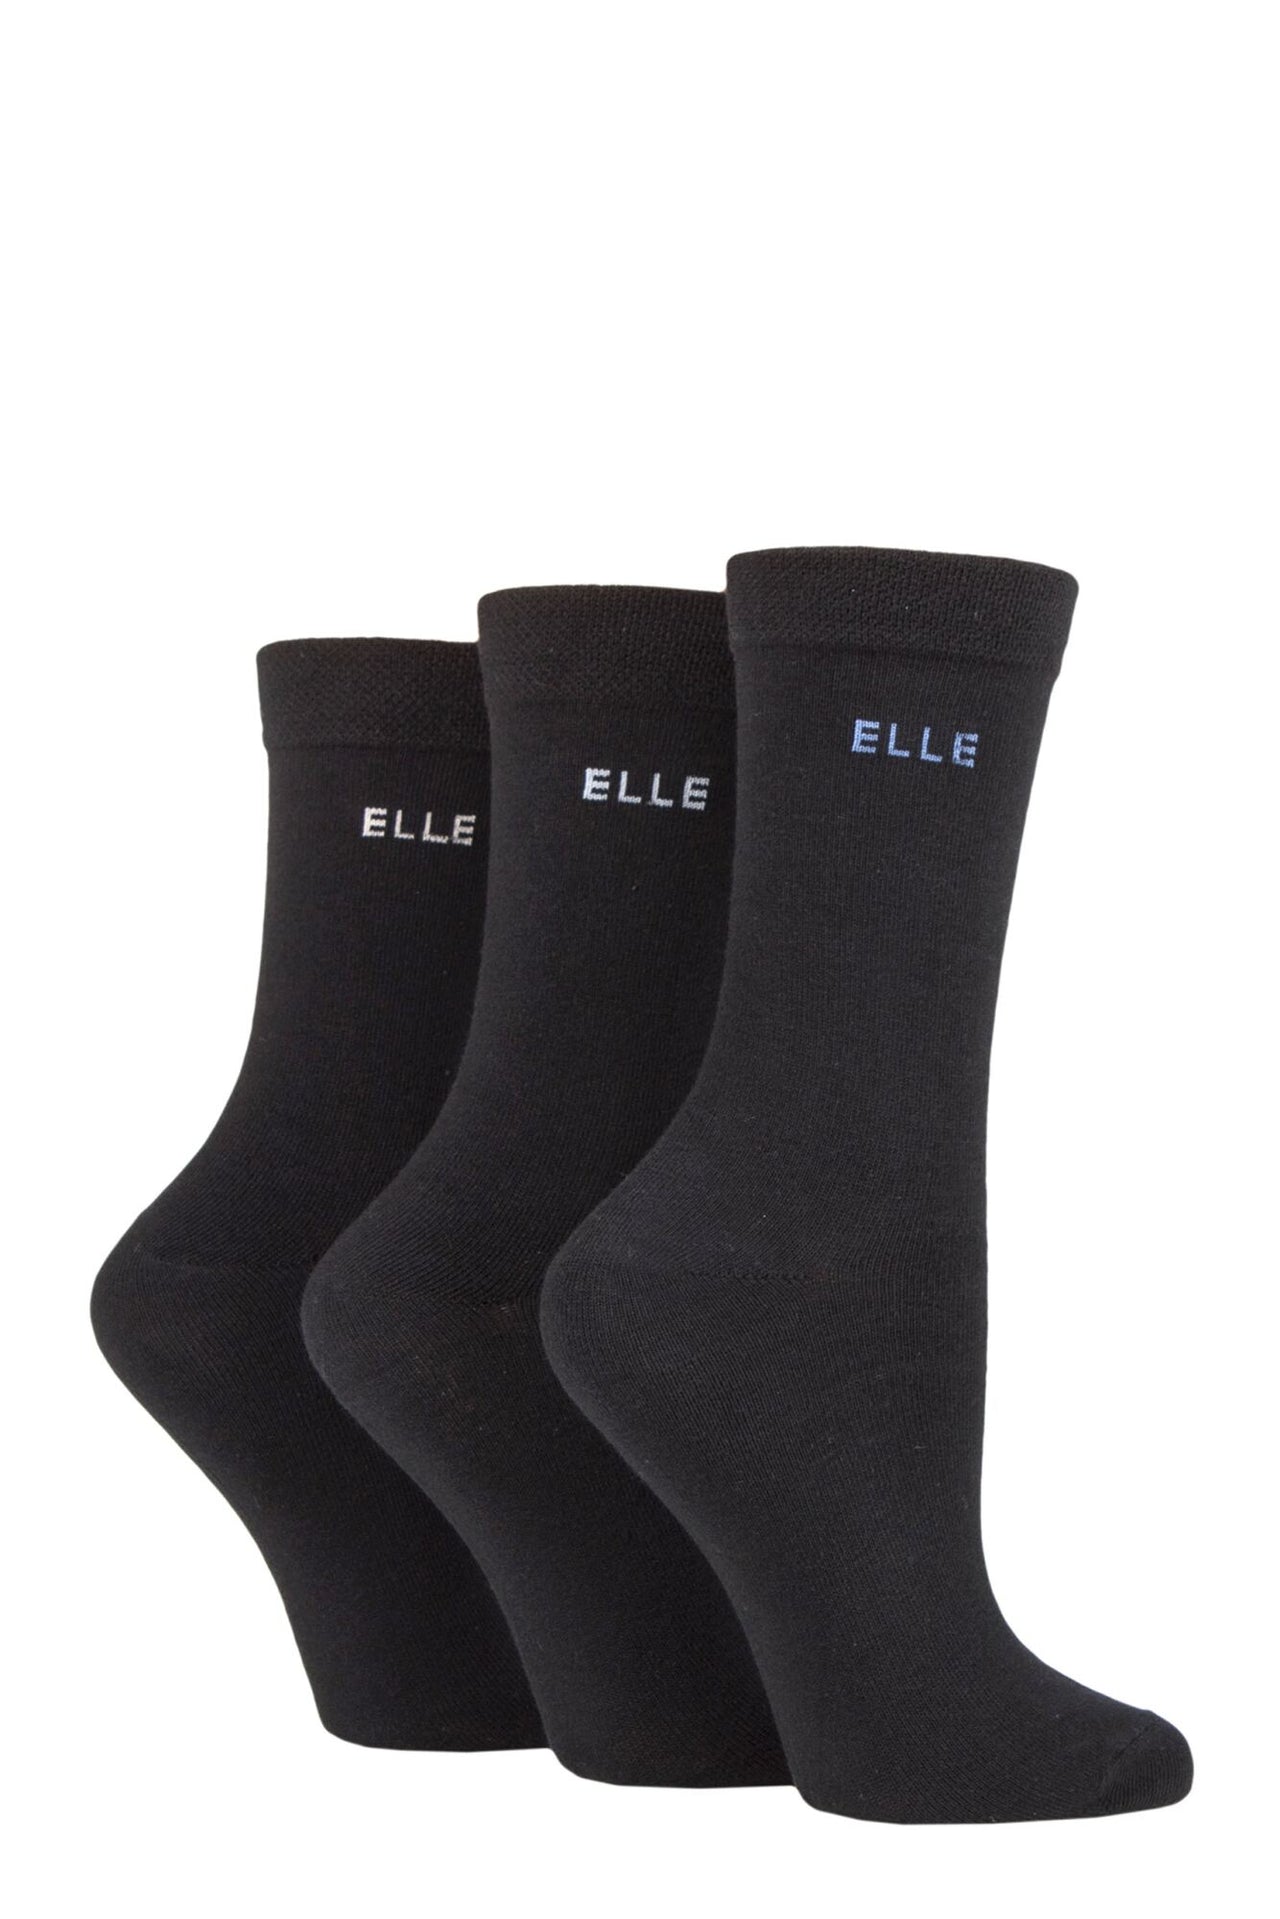 Elle 3 Pair Plain Black Cotton Socks